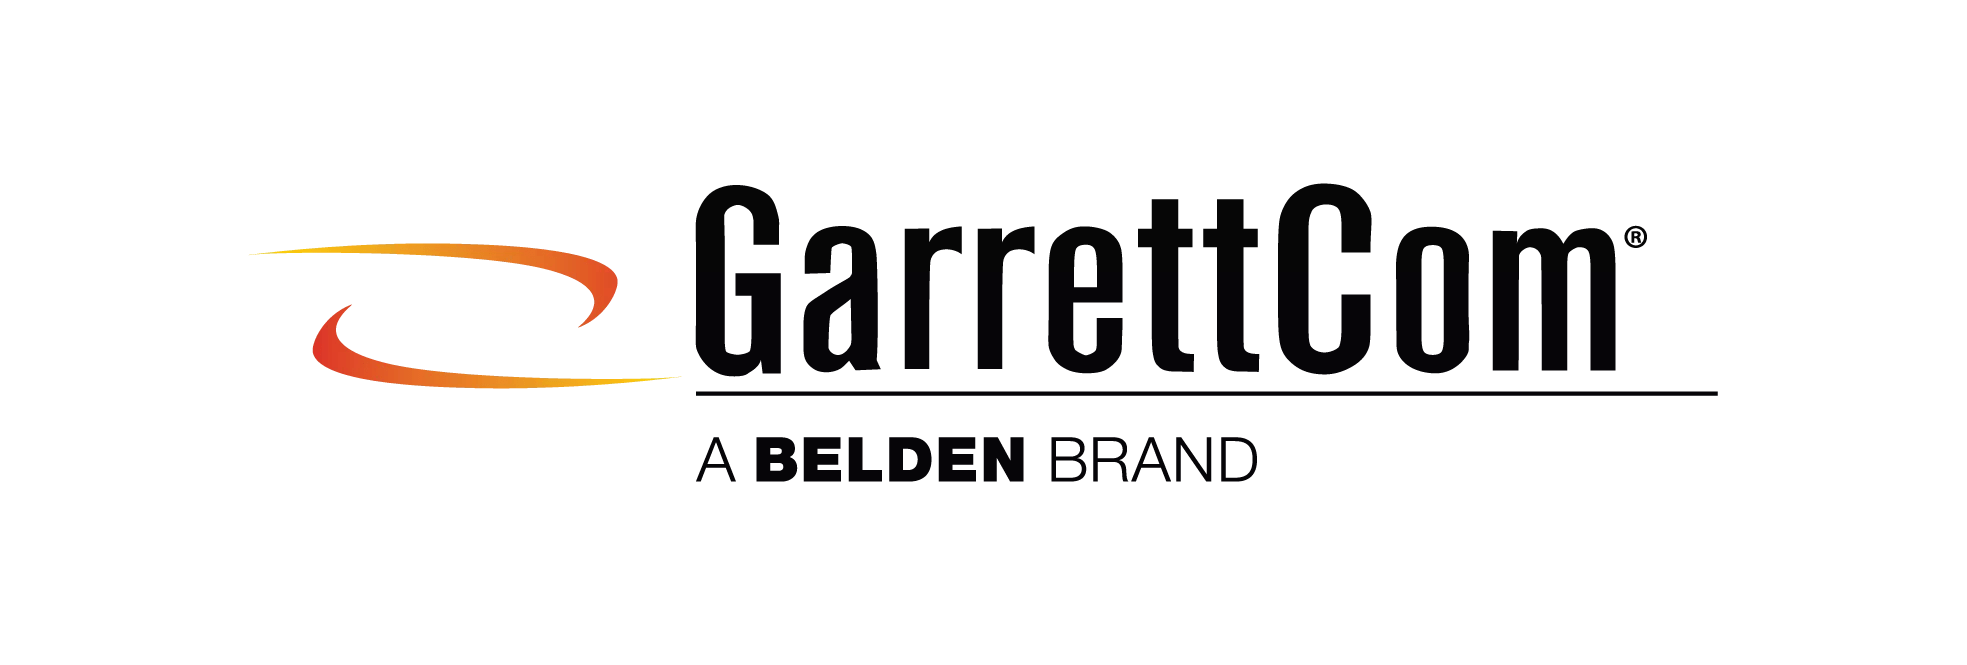 GarrettCom logo